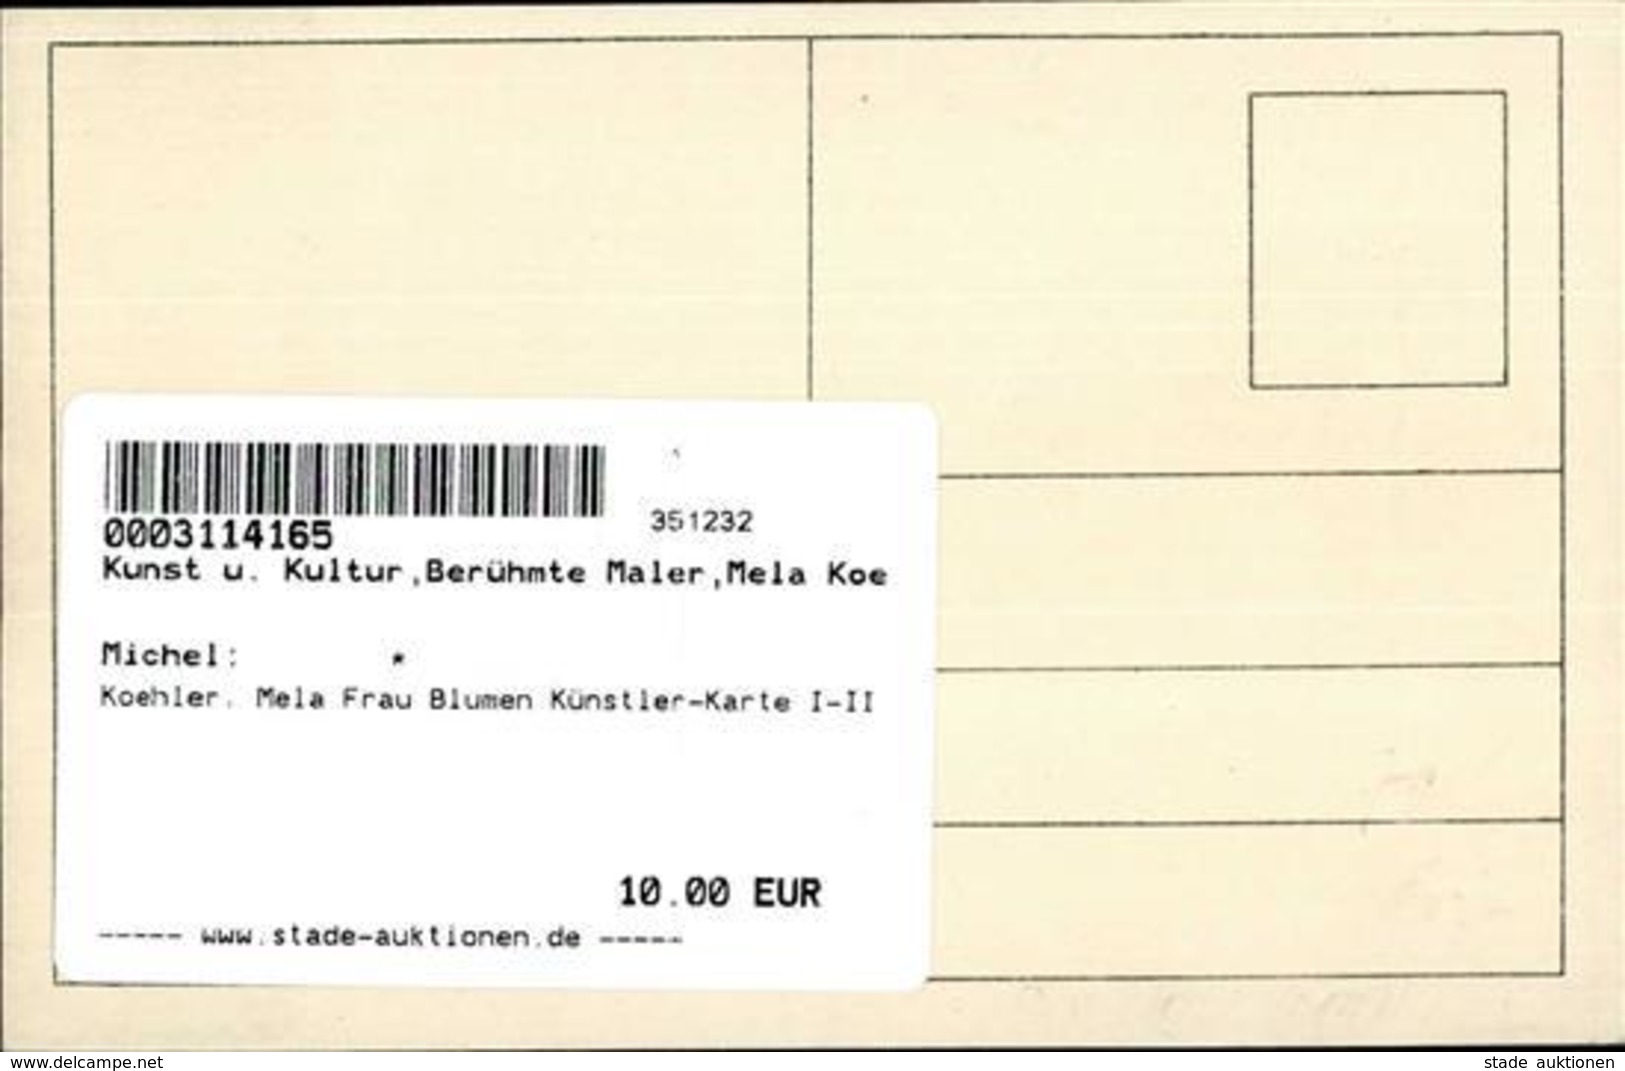 Koehler, Mela Frau Blumen Künstler-Karte I-II - Köhler, Mela